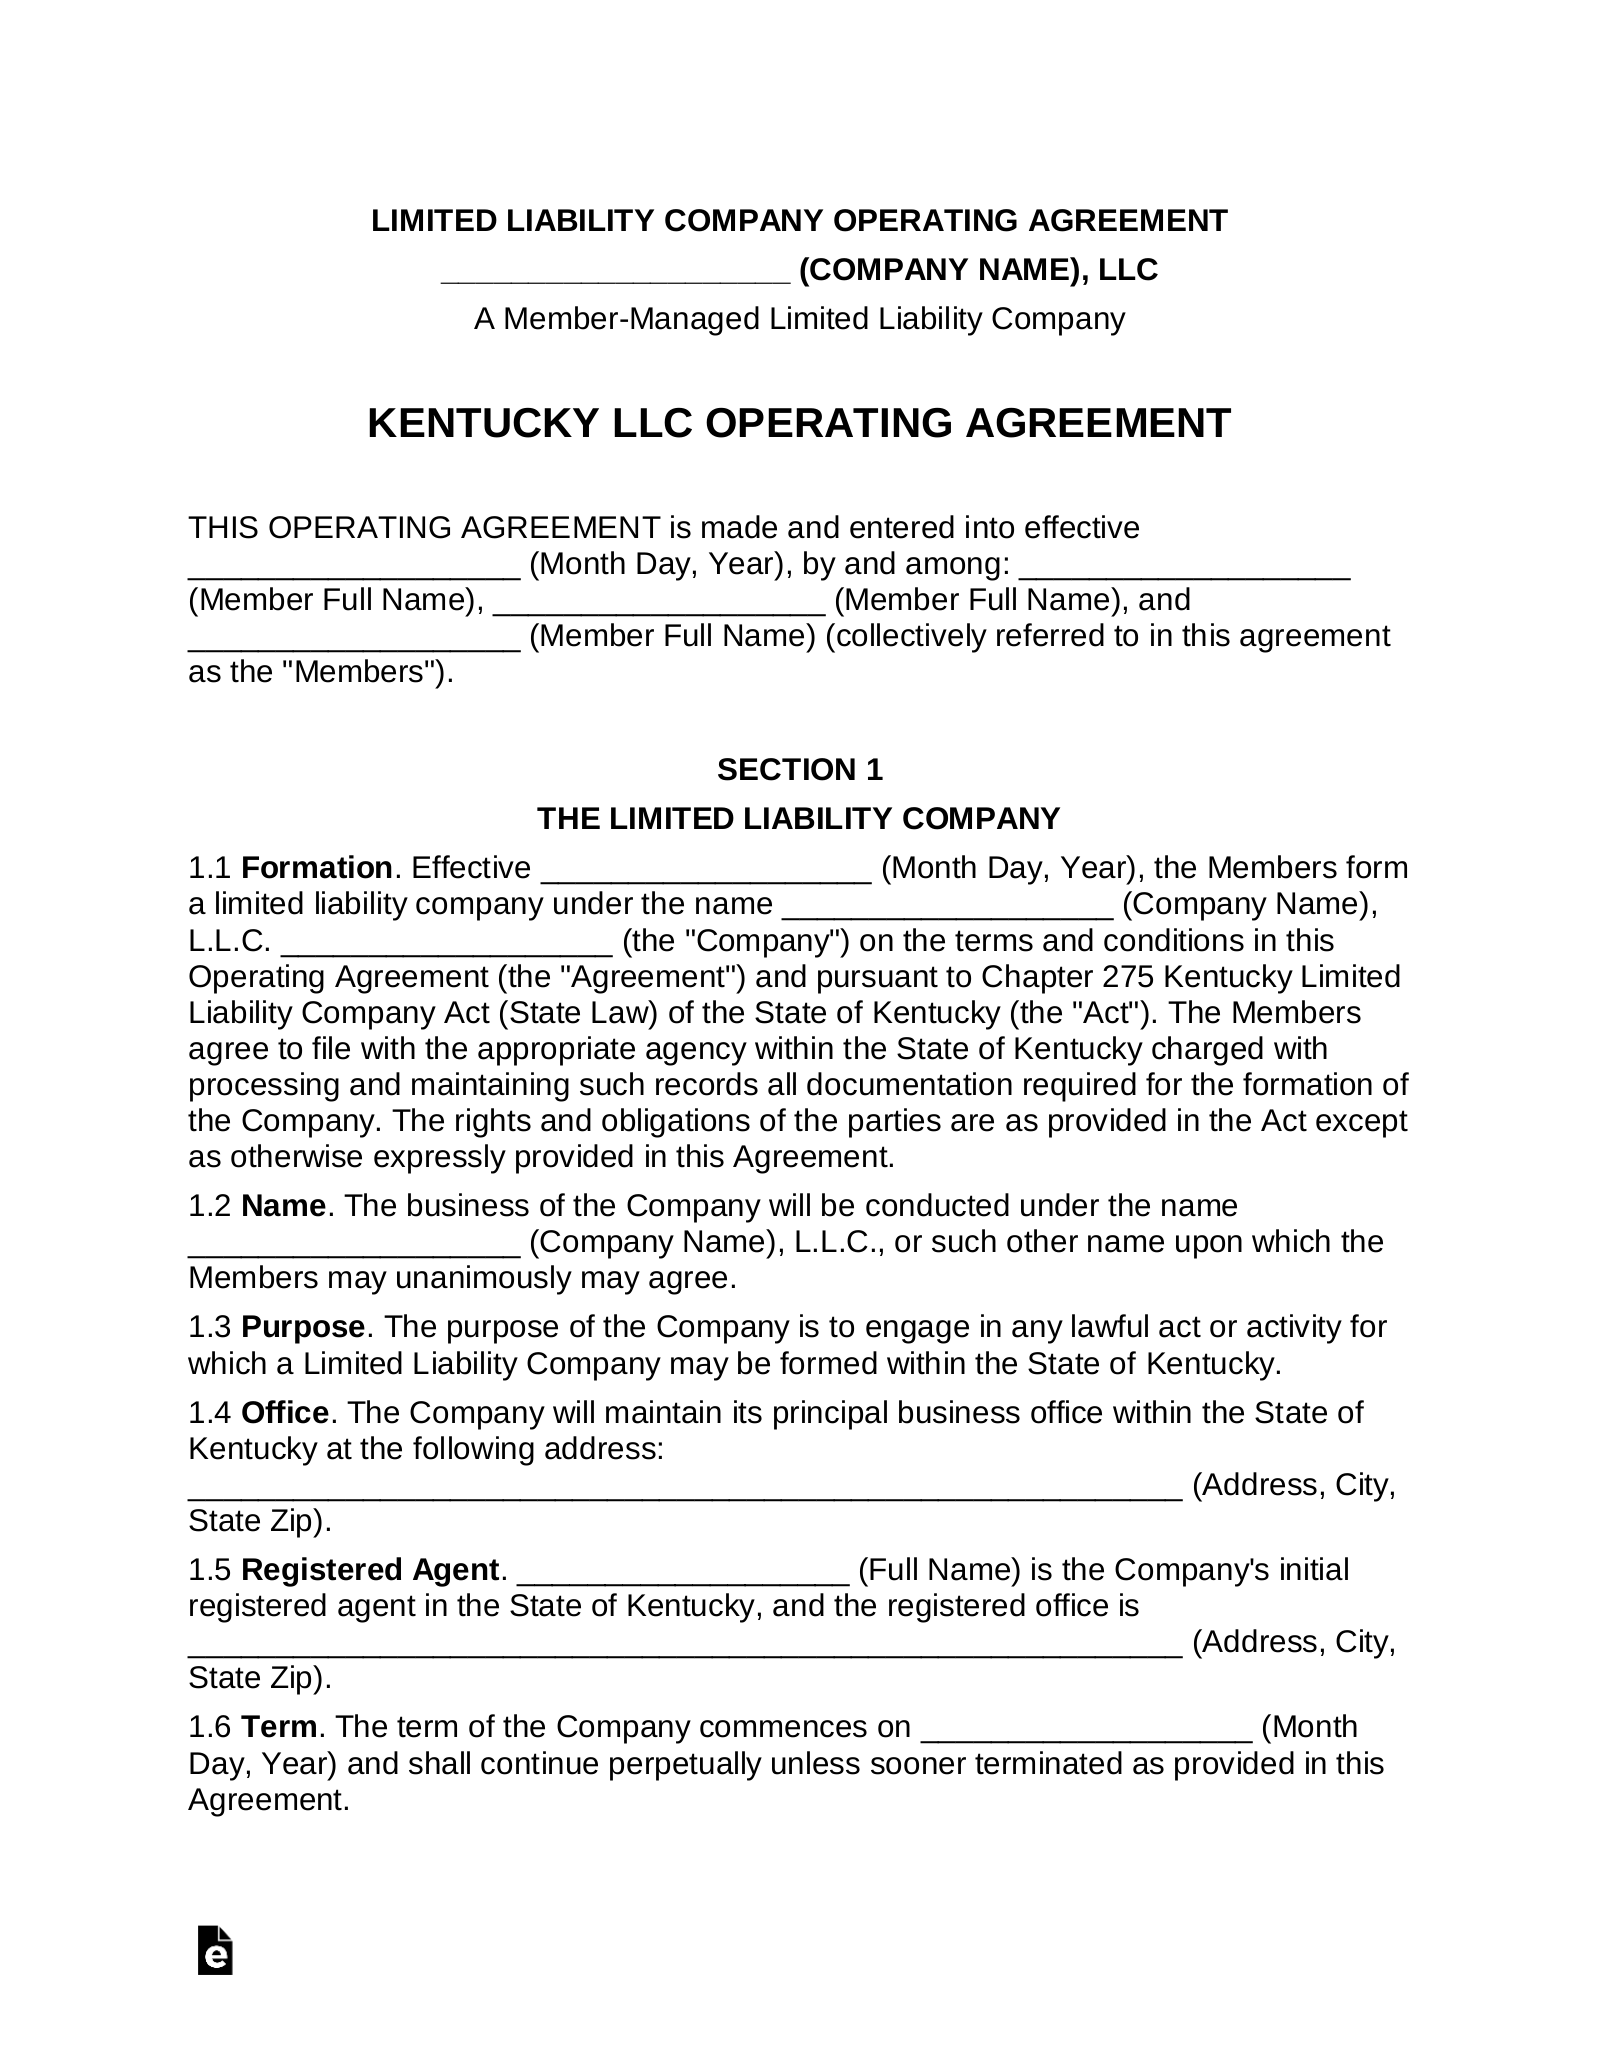 Kentucky Multi-Member LLC Operating Agreement Form